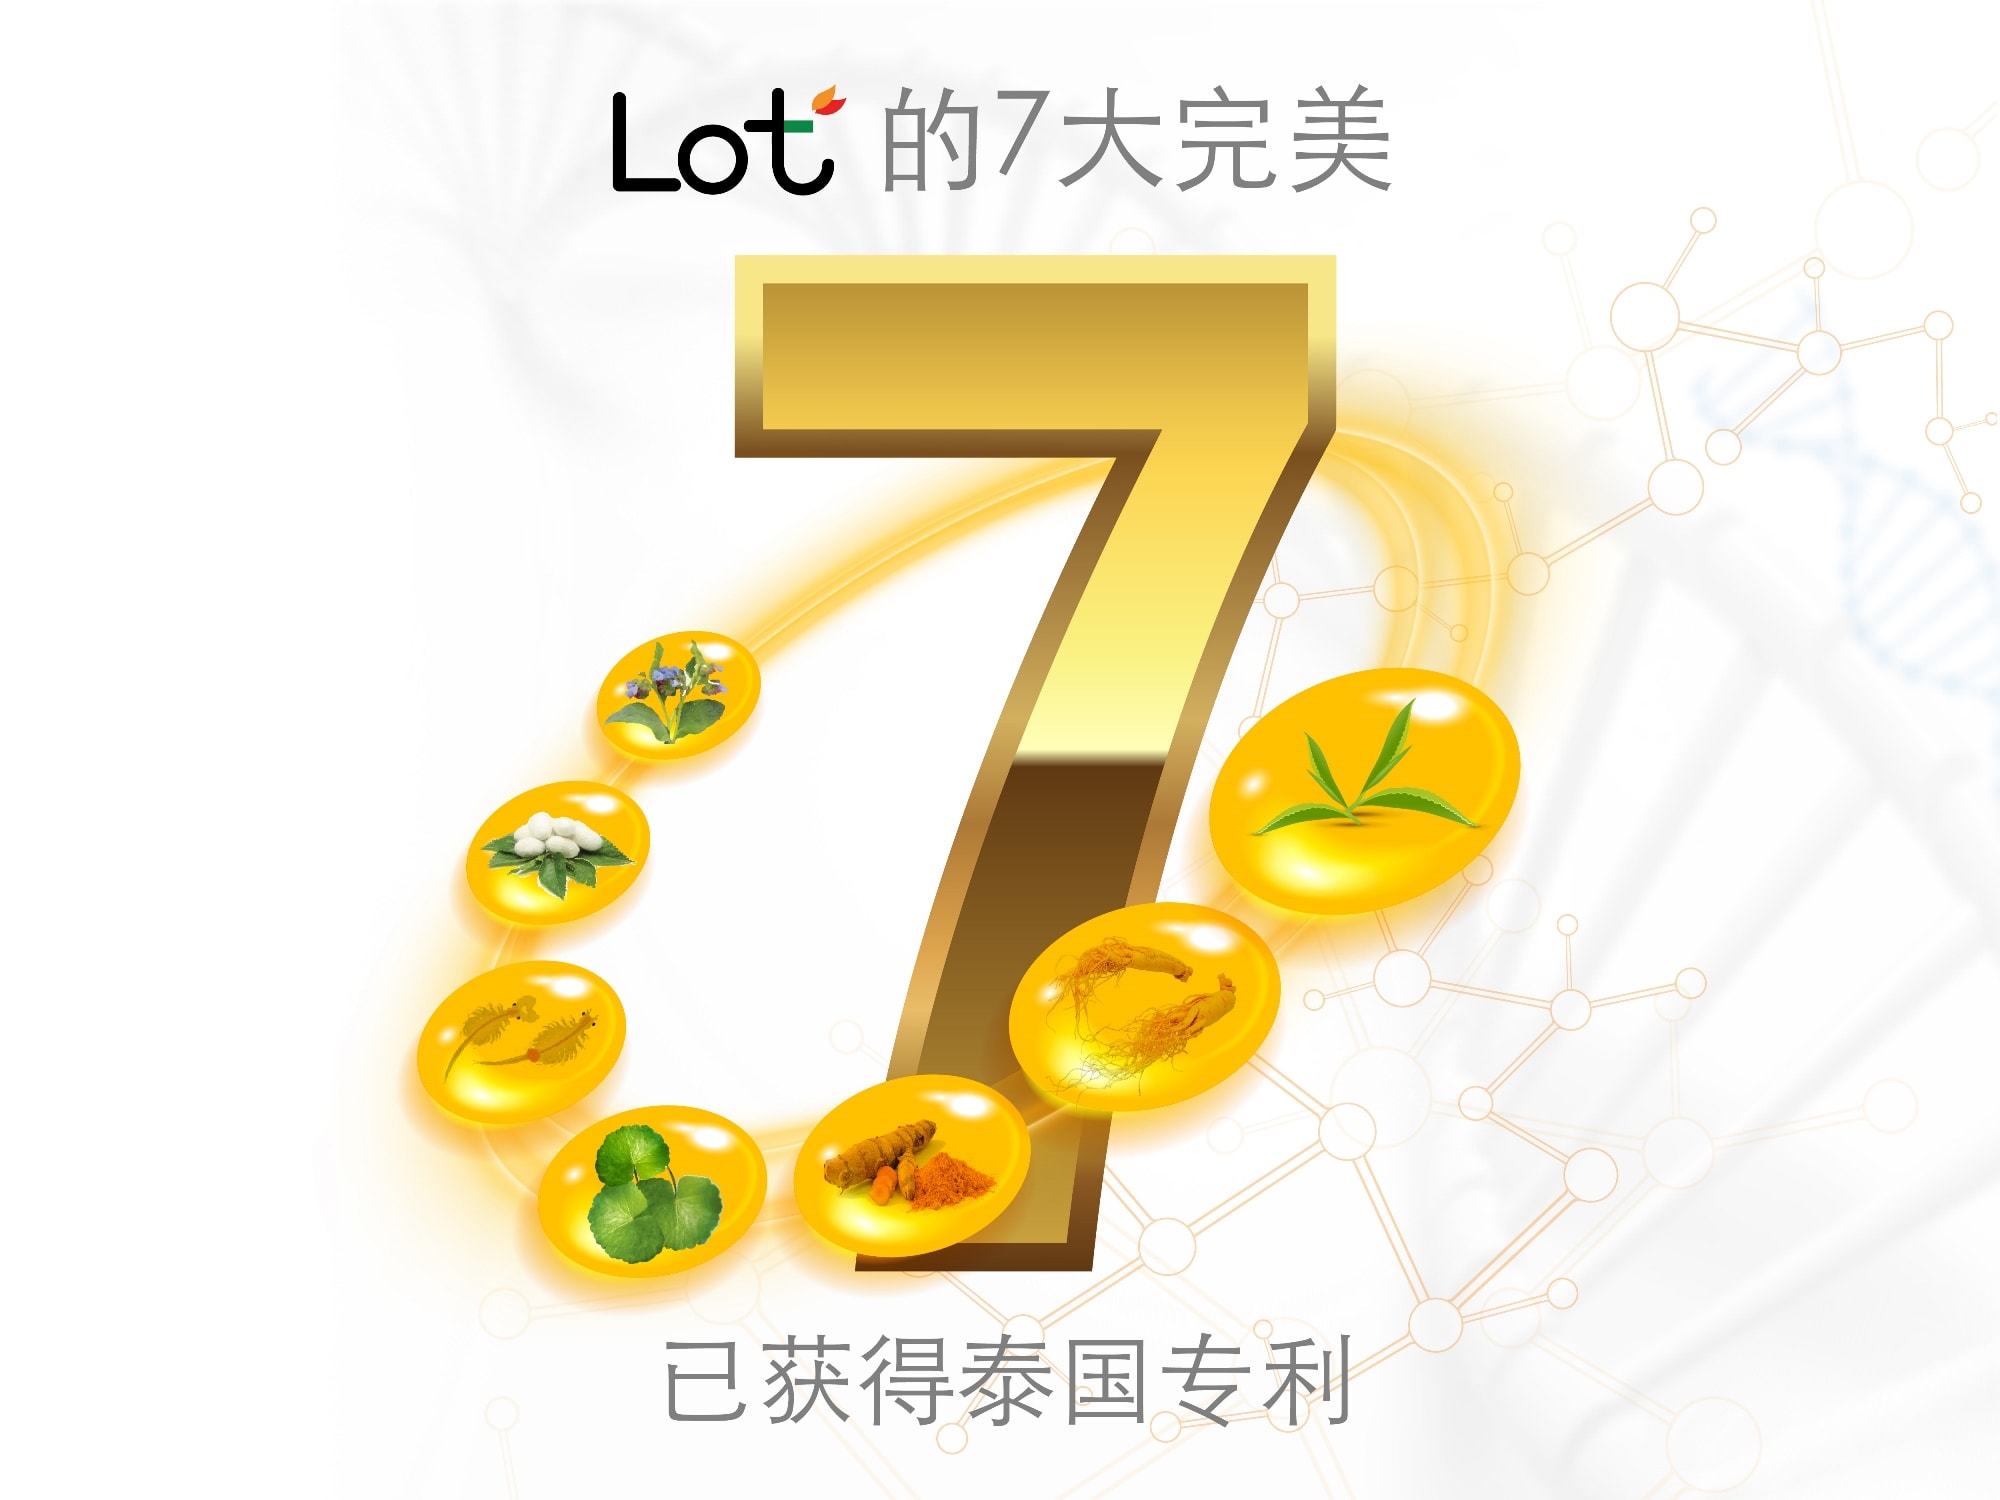 7 Perfect of LOT (Chinese version) โดย ลอต ลอเรียนท์ LOT LORIENT